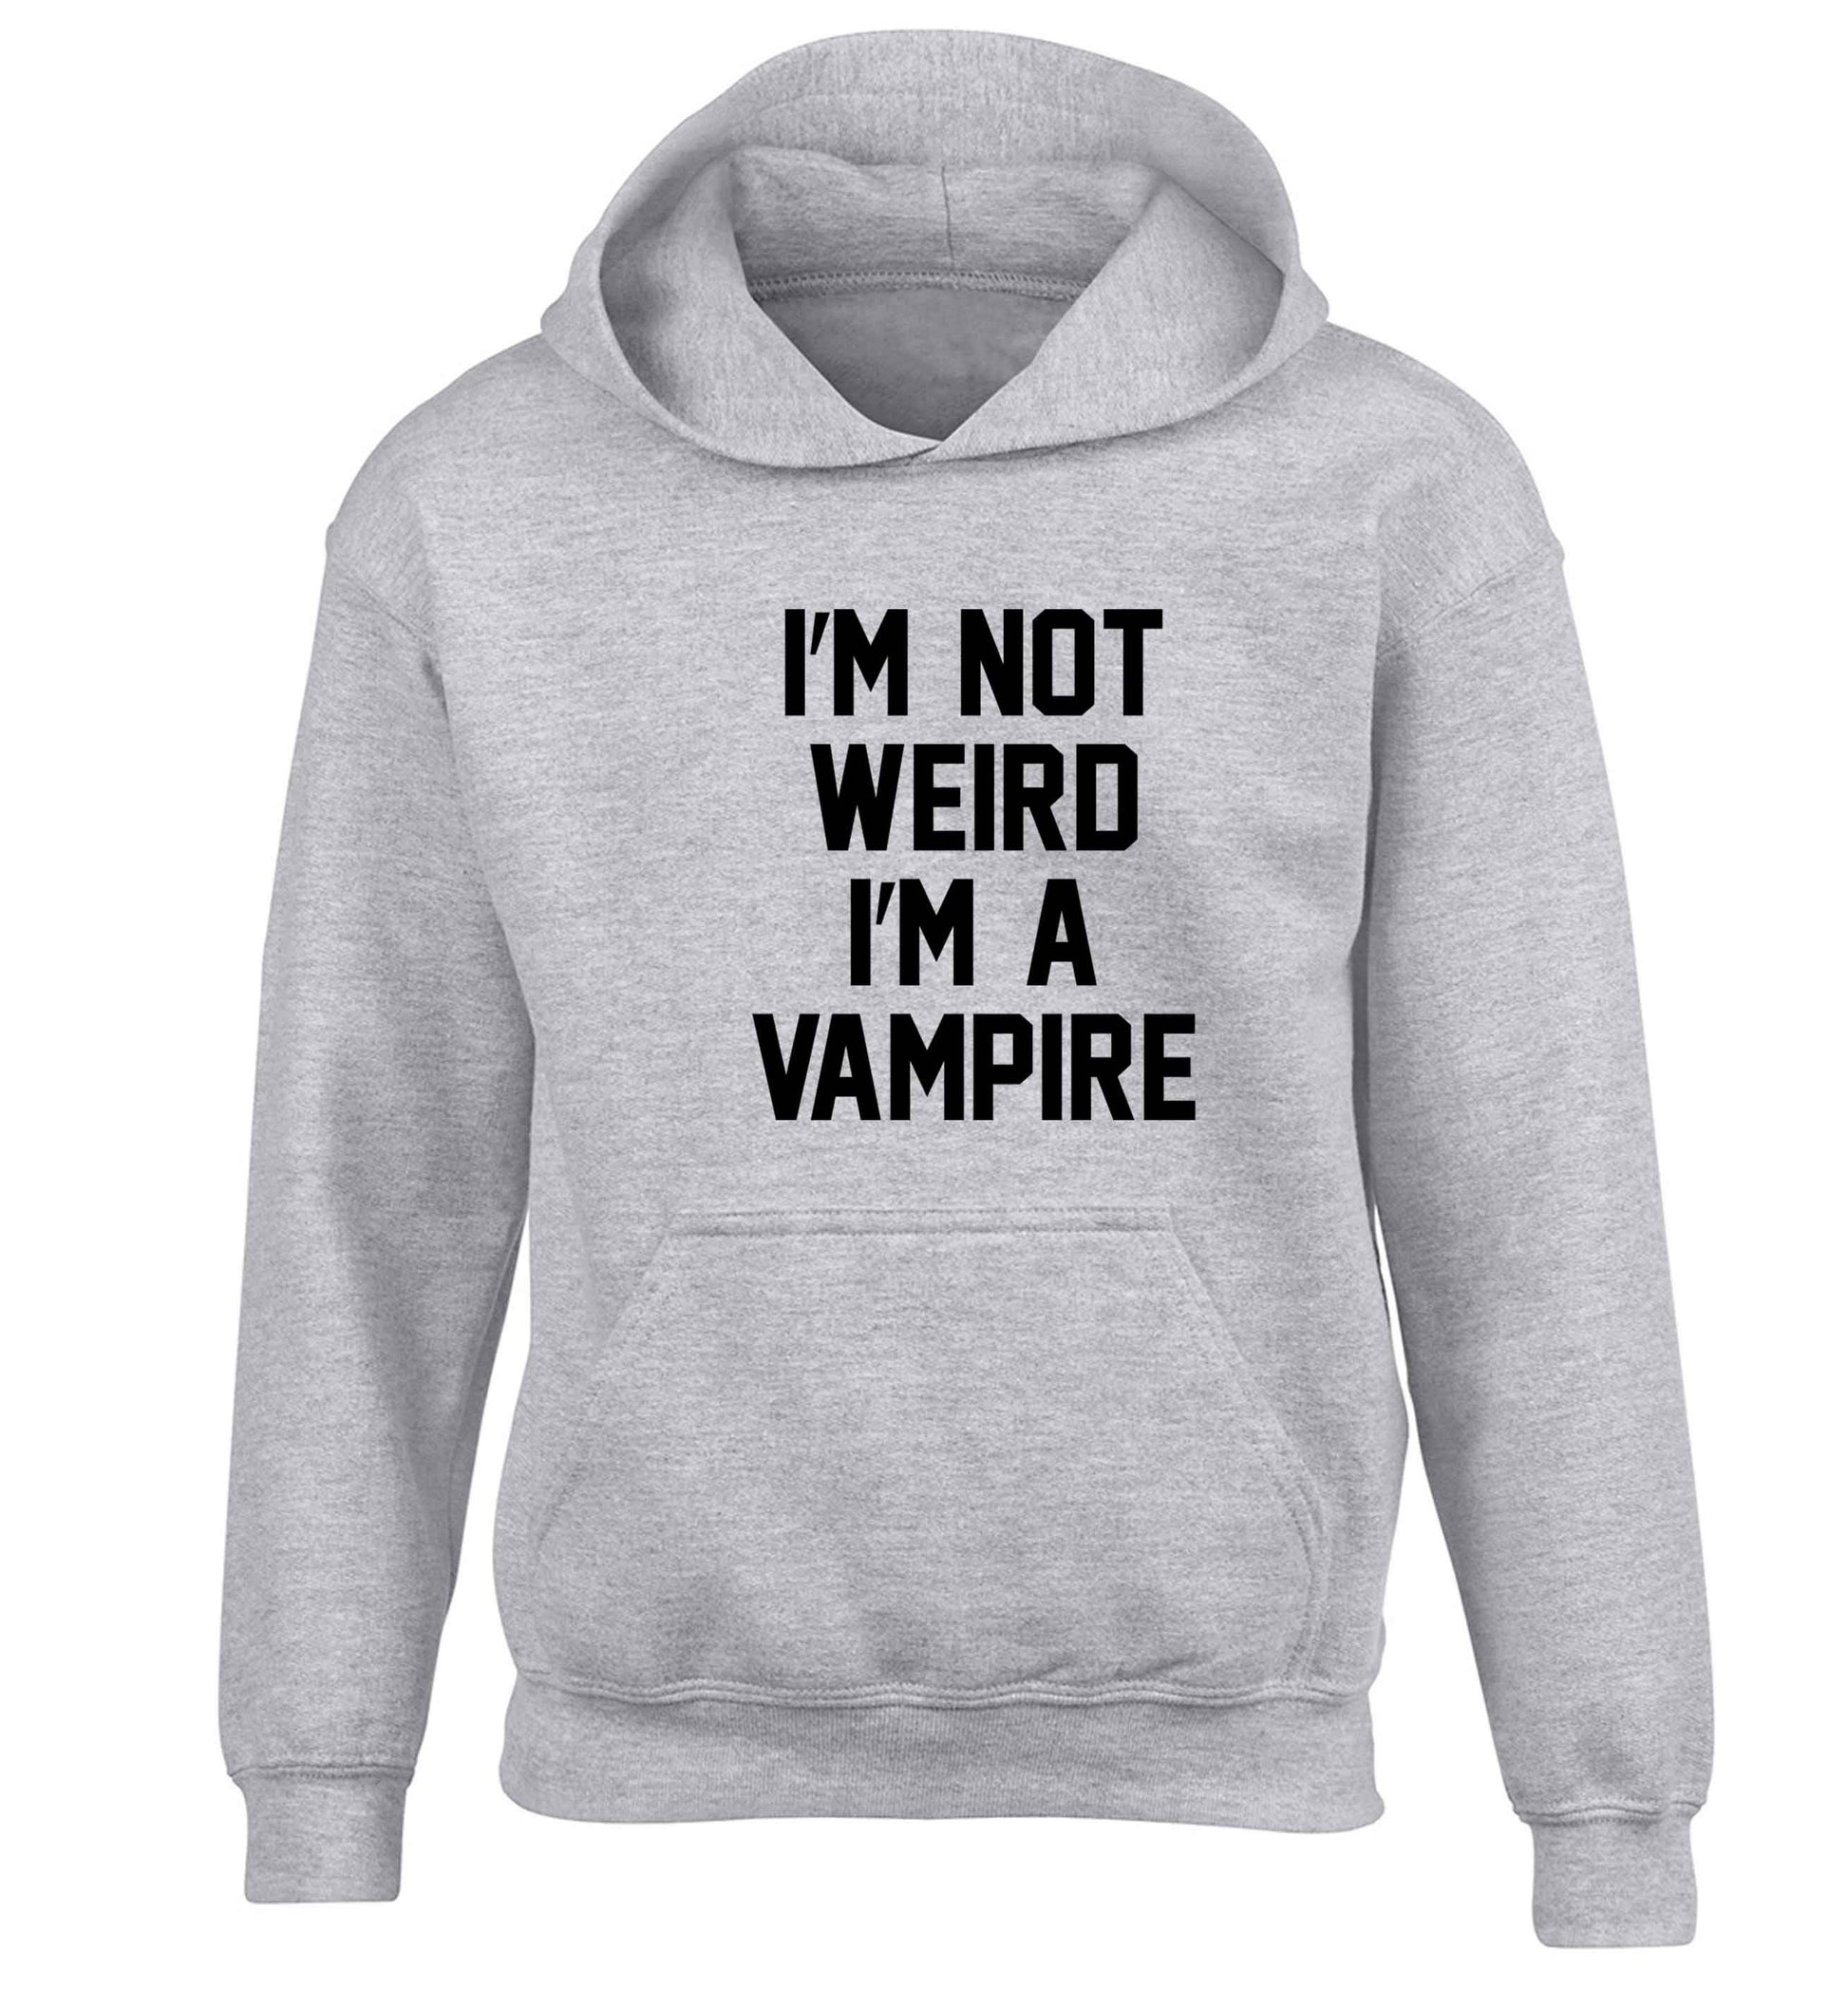 I'm not weird I'm a vampire children's grey hoodie 12-13 Years